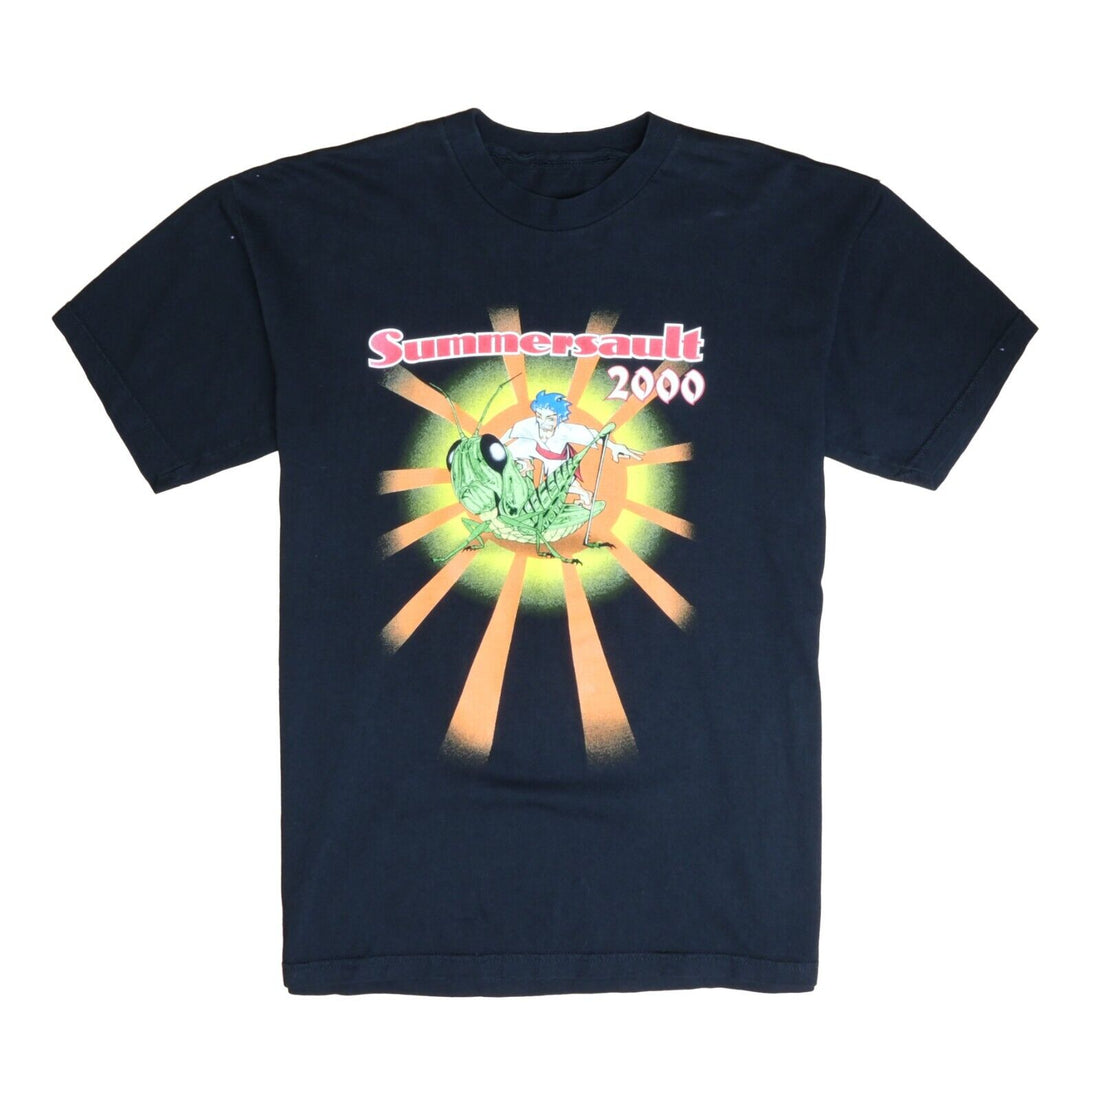 Vintage Summersault 2000 Tour T-Shirt Medium Band Tee Smashing Pumpkins Deftones